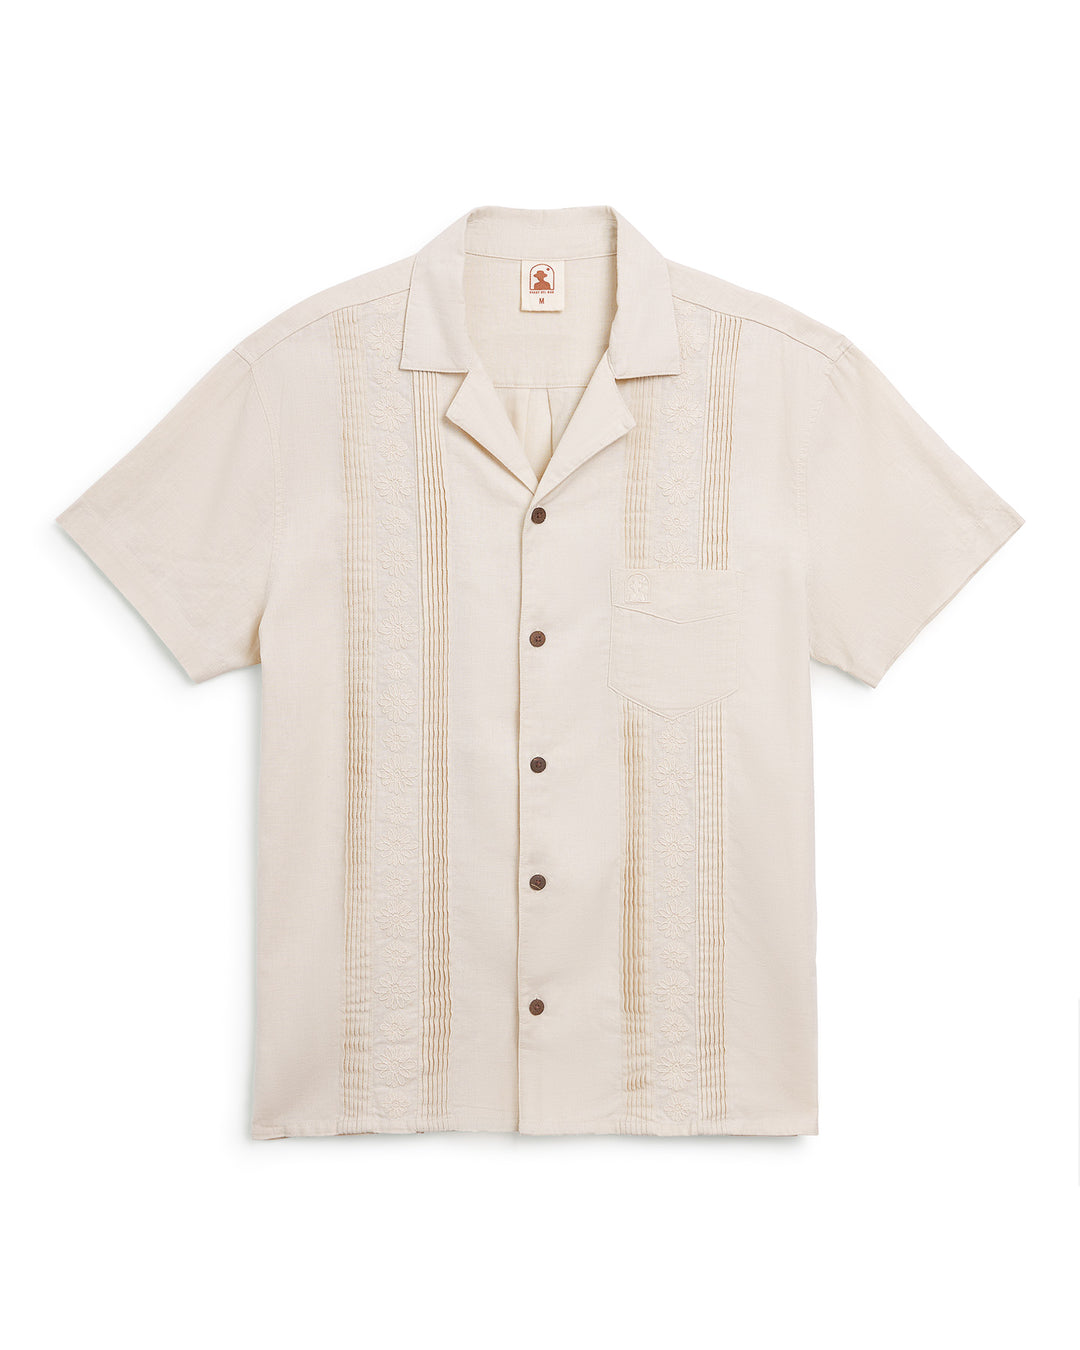 A men's white Brisa Linen Shirt - Vintage Ivory by Dandy Del Mar.